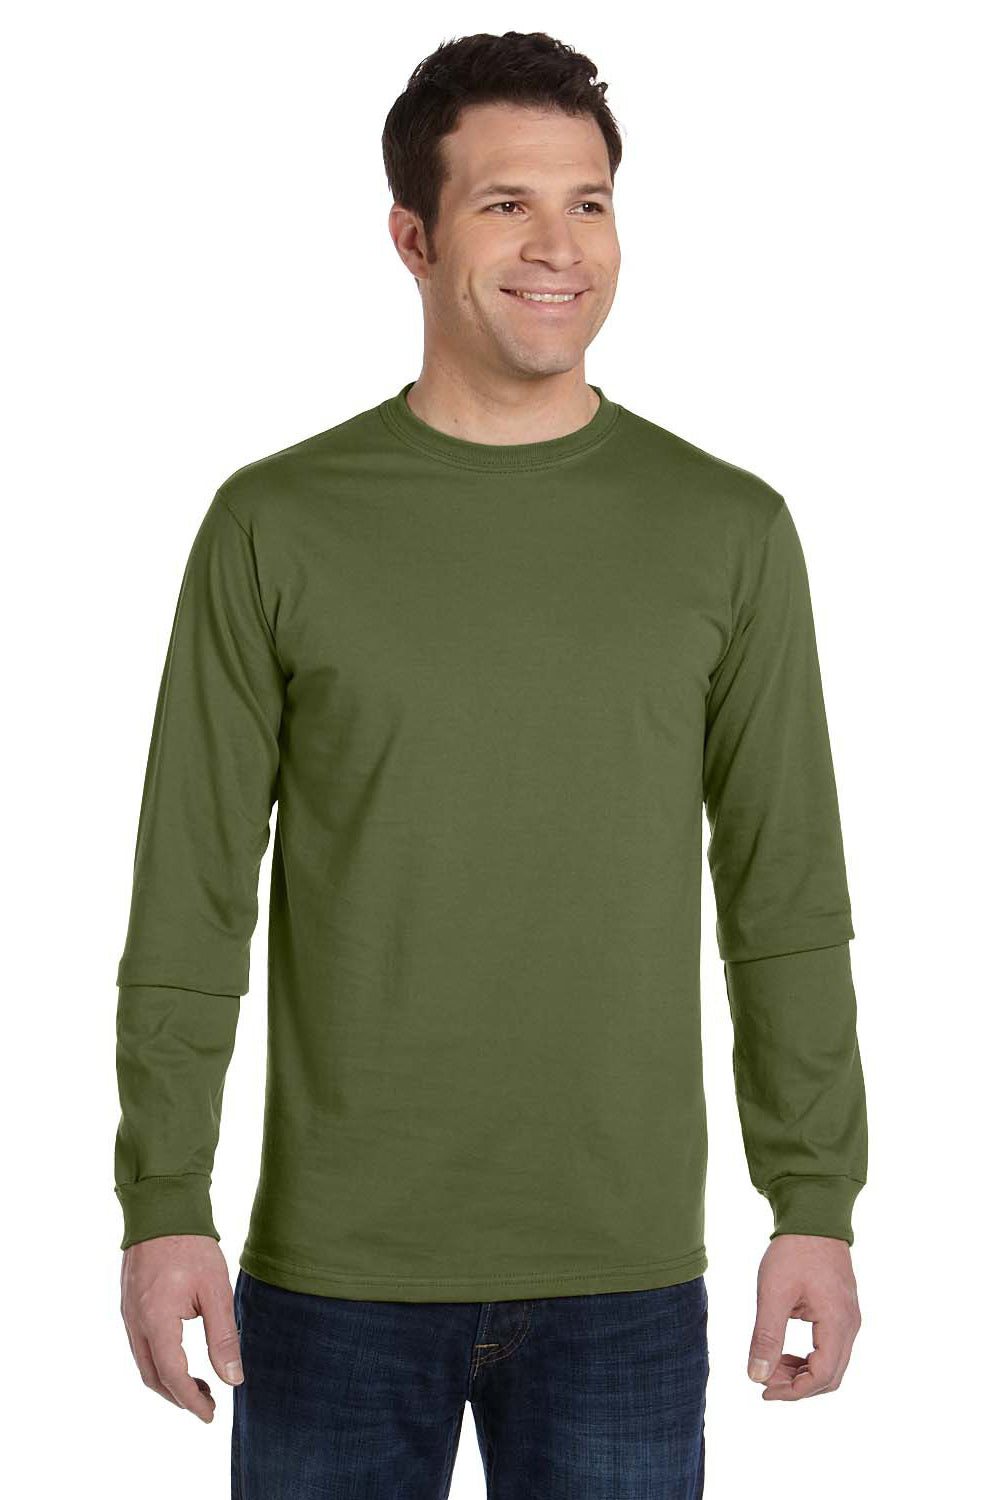 Econscious EC1500 Mens Long Sleeve Crewneck T-Shirt Olive Green Front